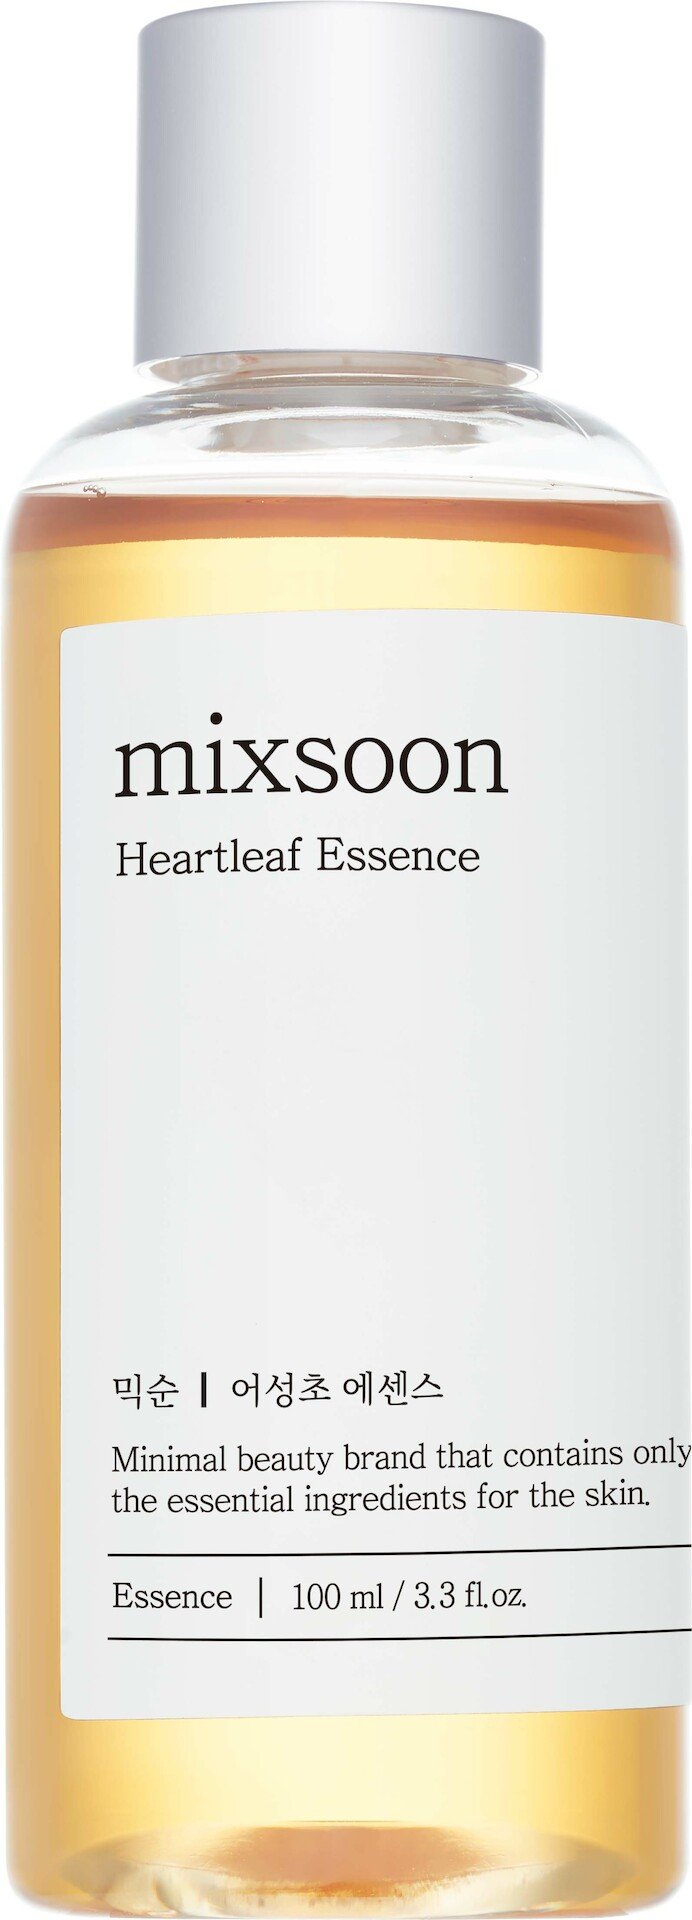 Mixsoon Heartleaf Essence 100ml